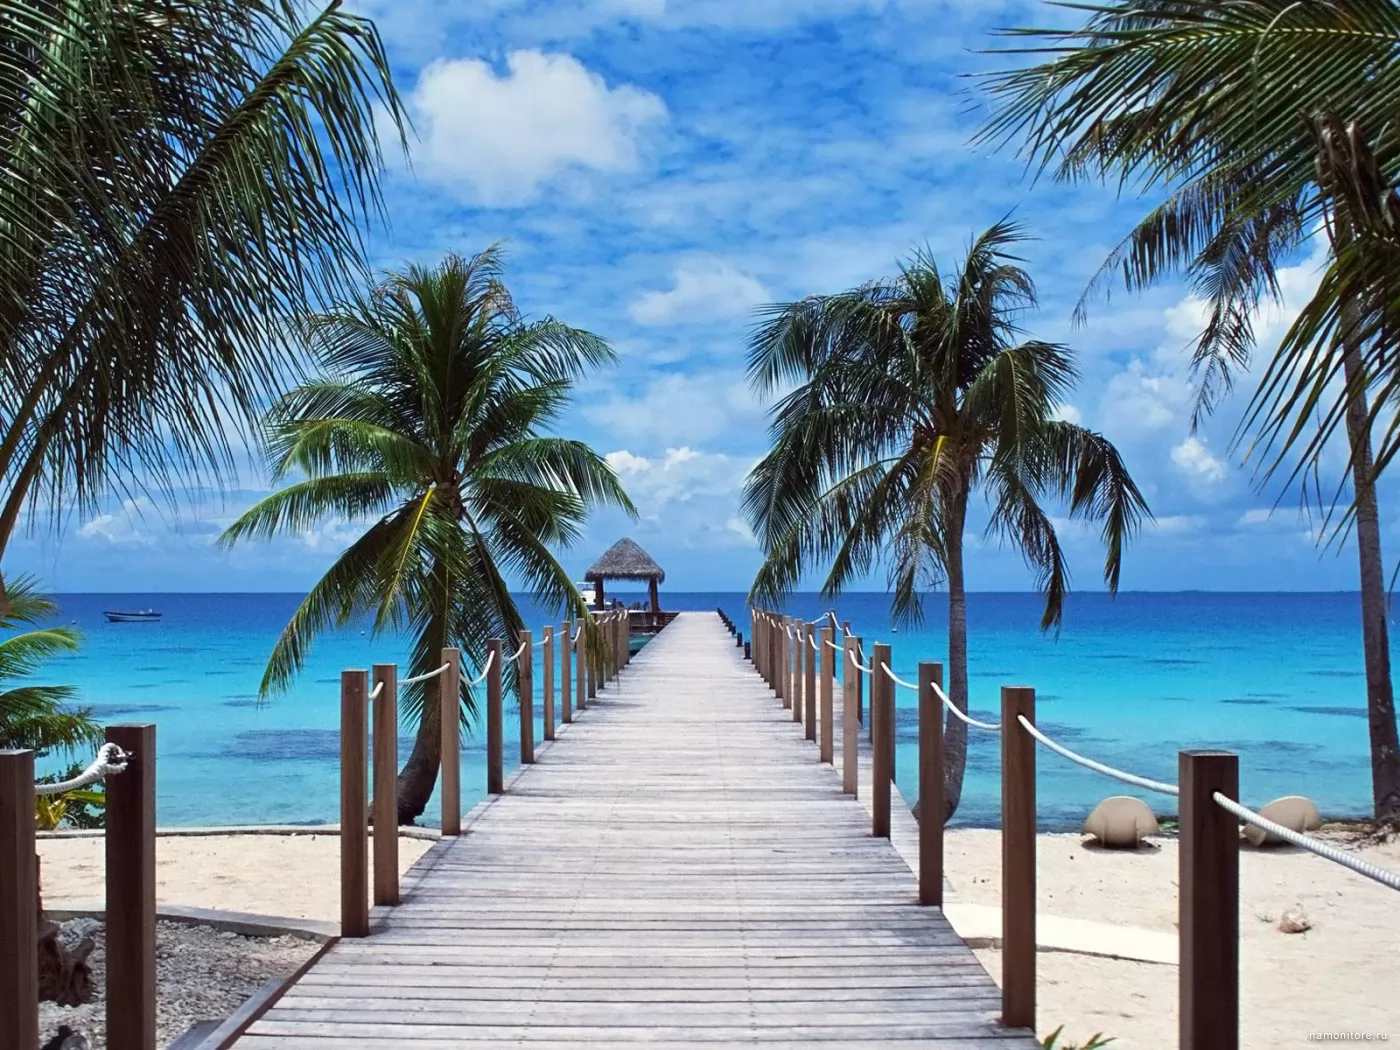 Tahiti, best, clipart, coast, dark blue, island, landing stage, nature, palm trees, sea, tropics x